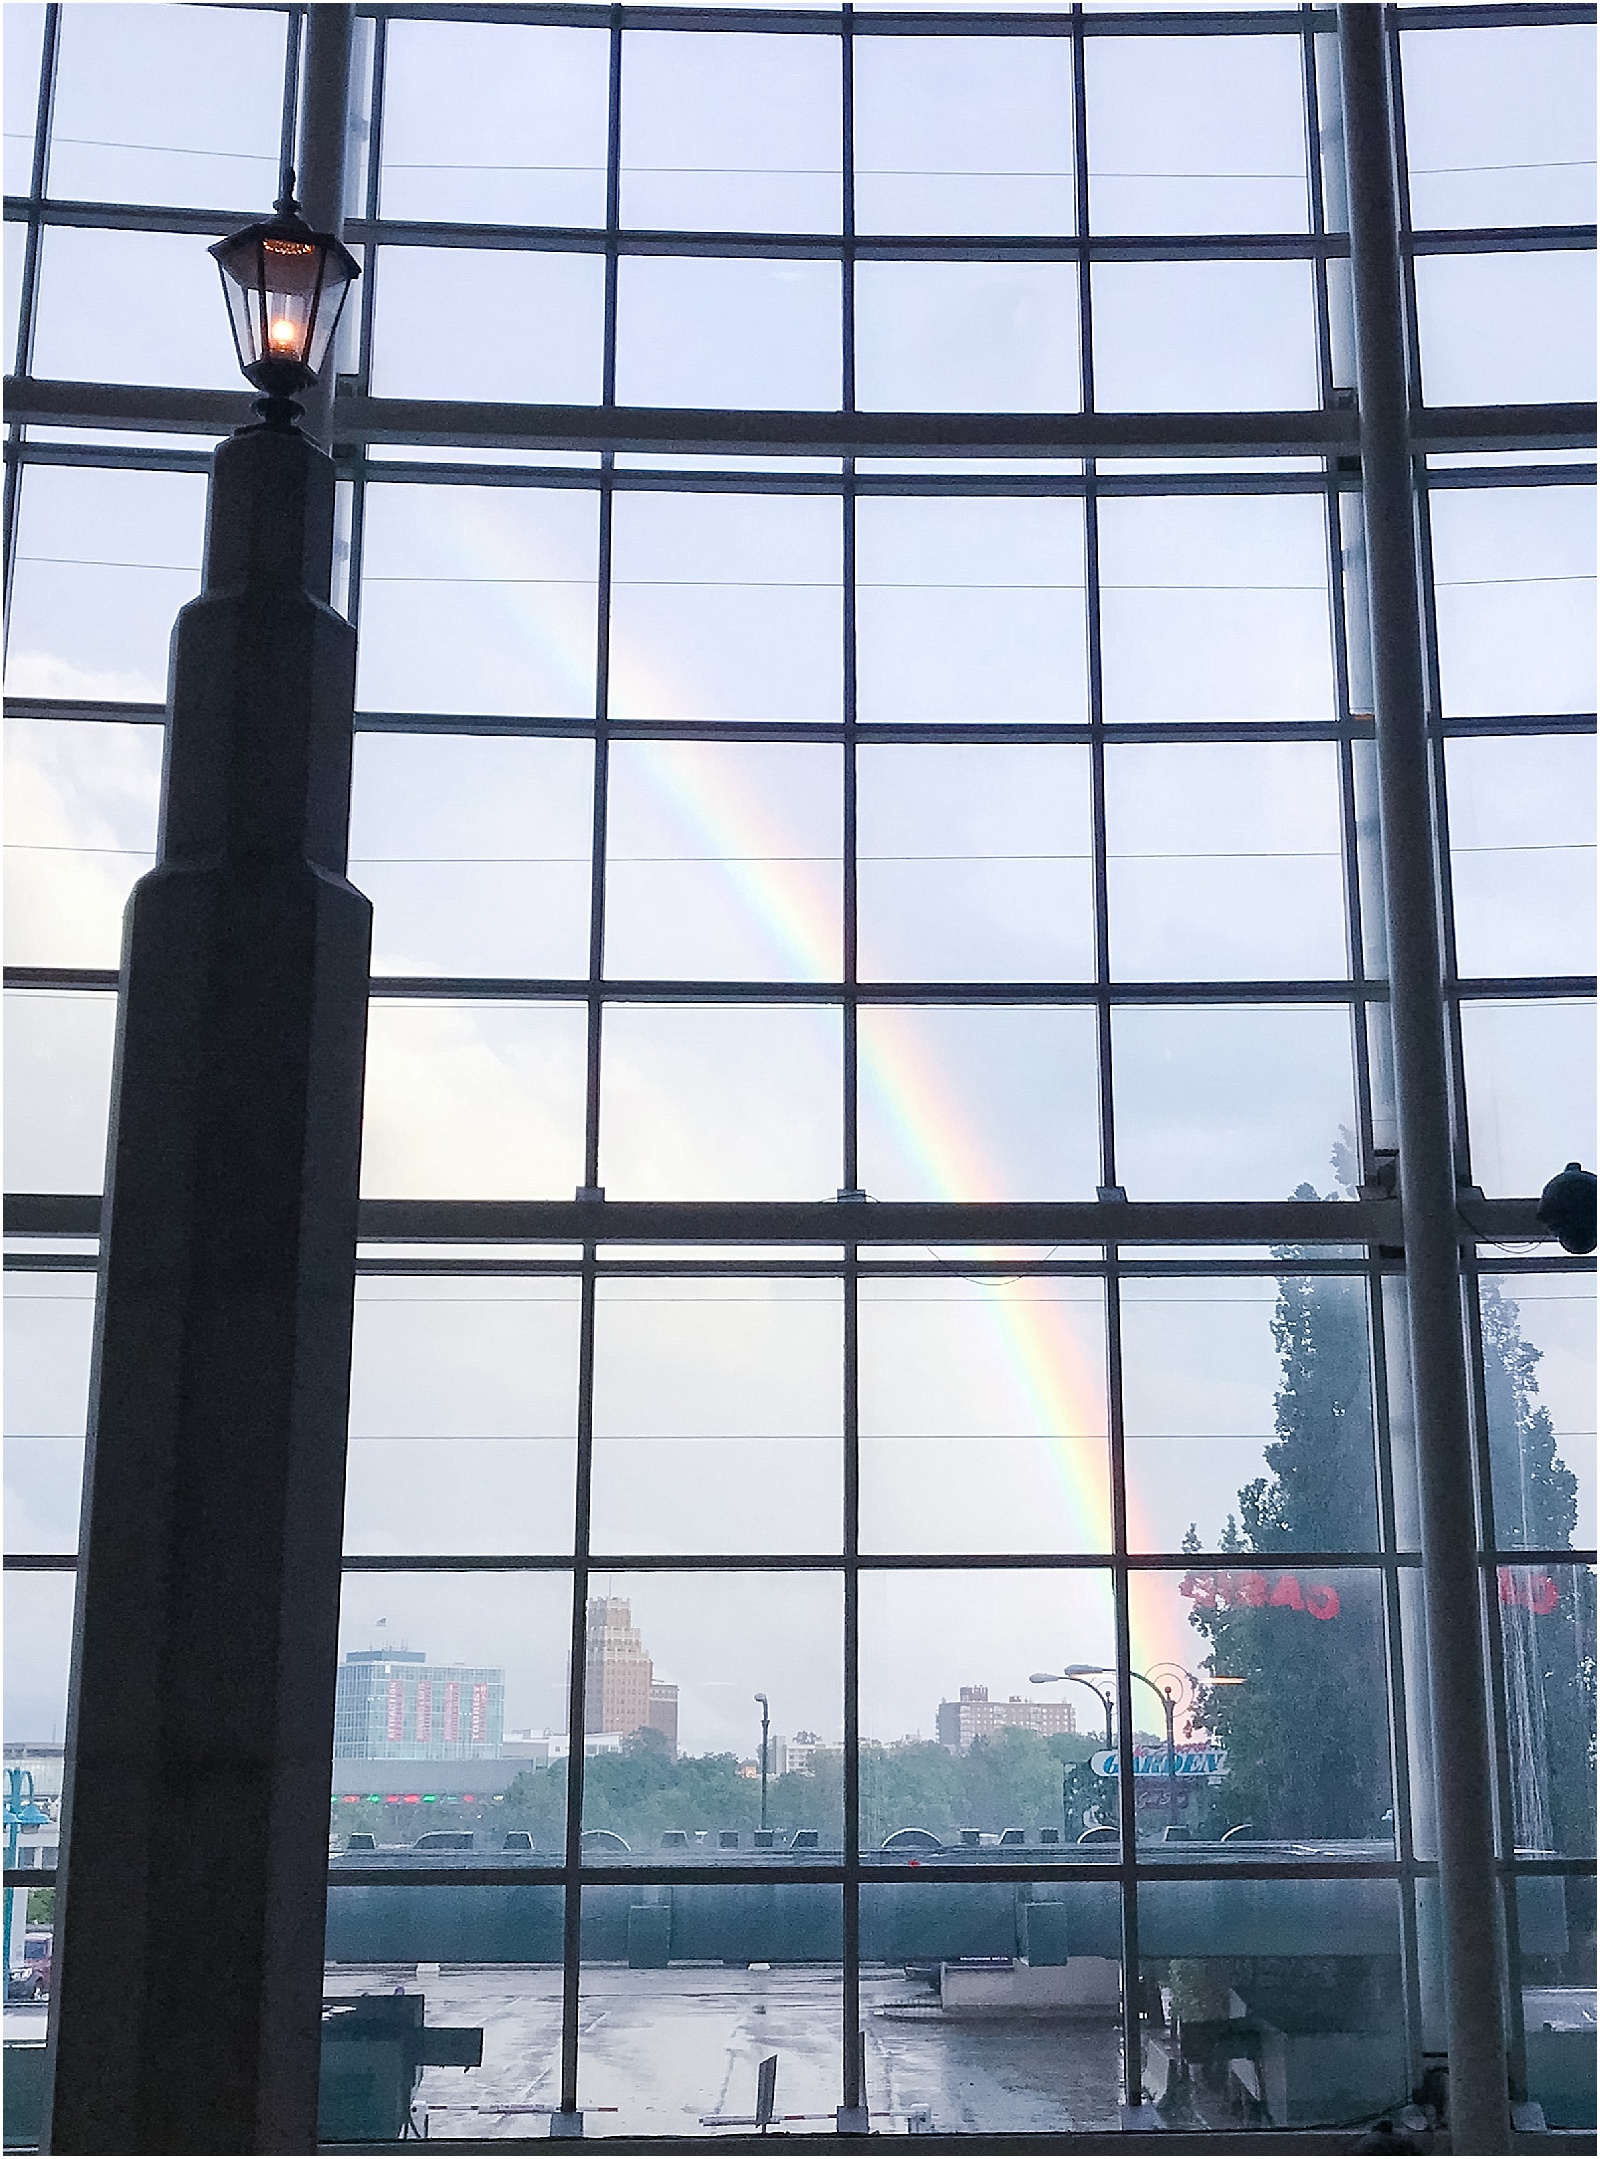 Rainbow at Crowne Plaza Hotel, Niagara Falls, Ontario, Canada